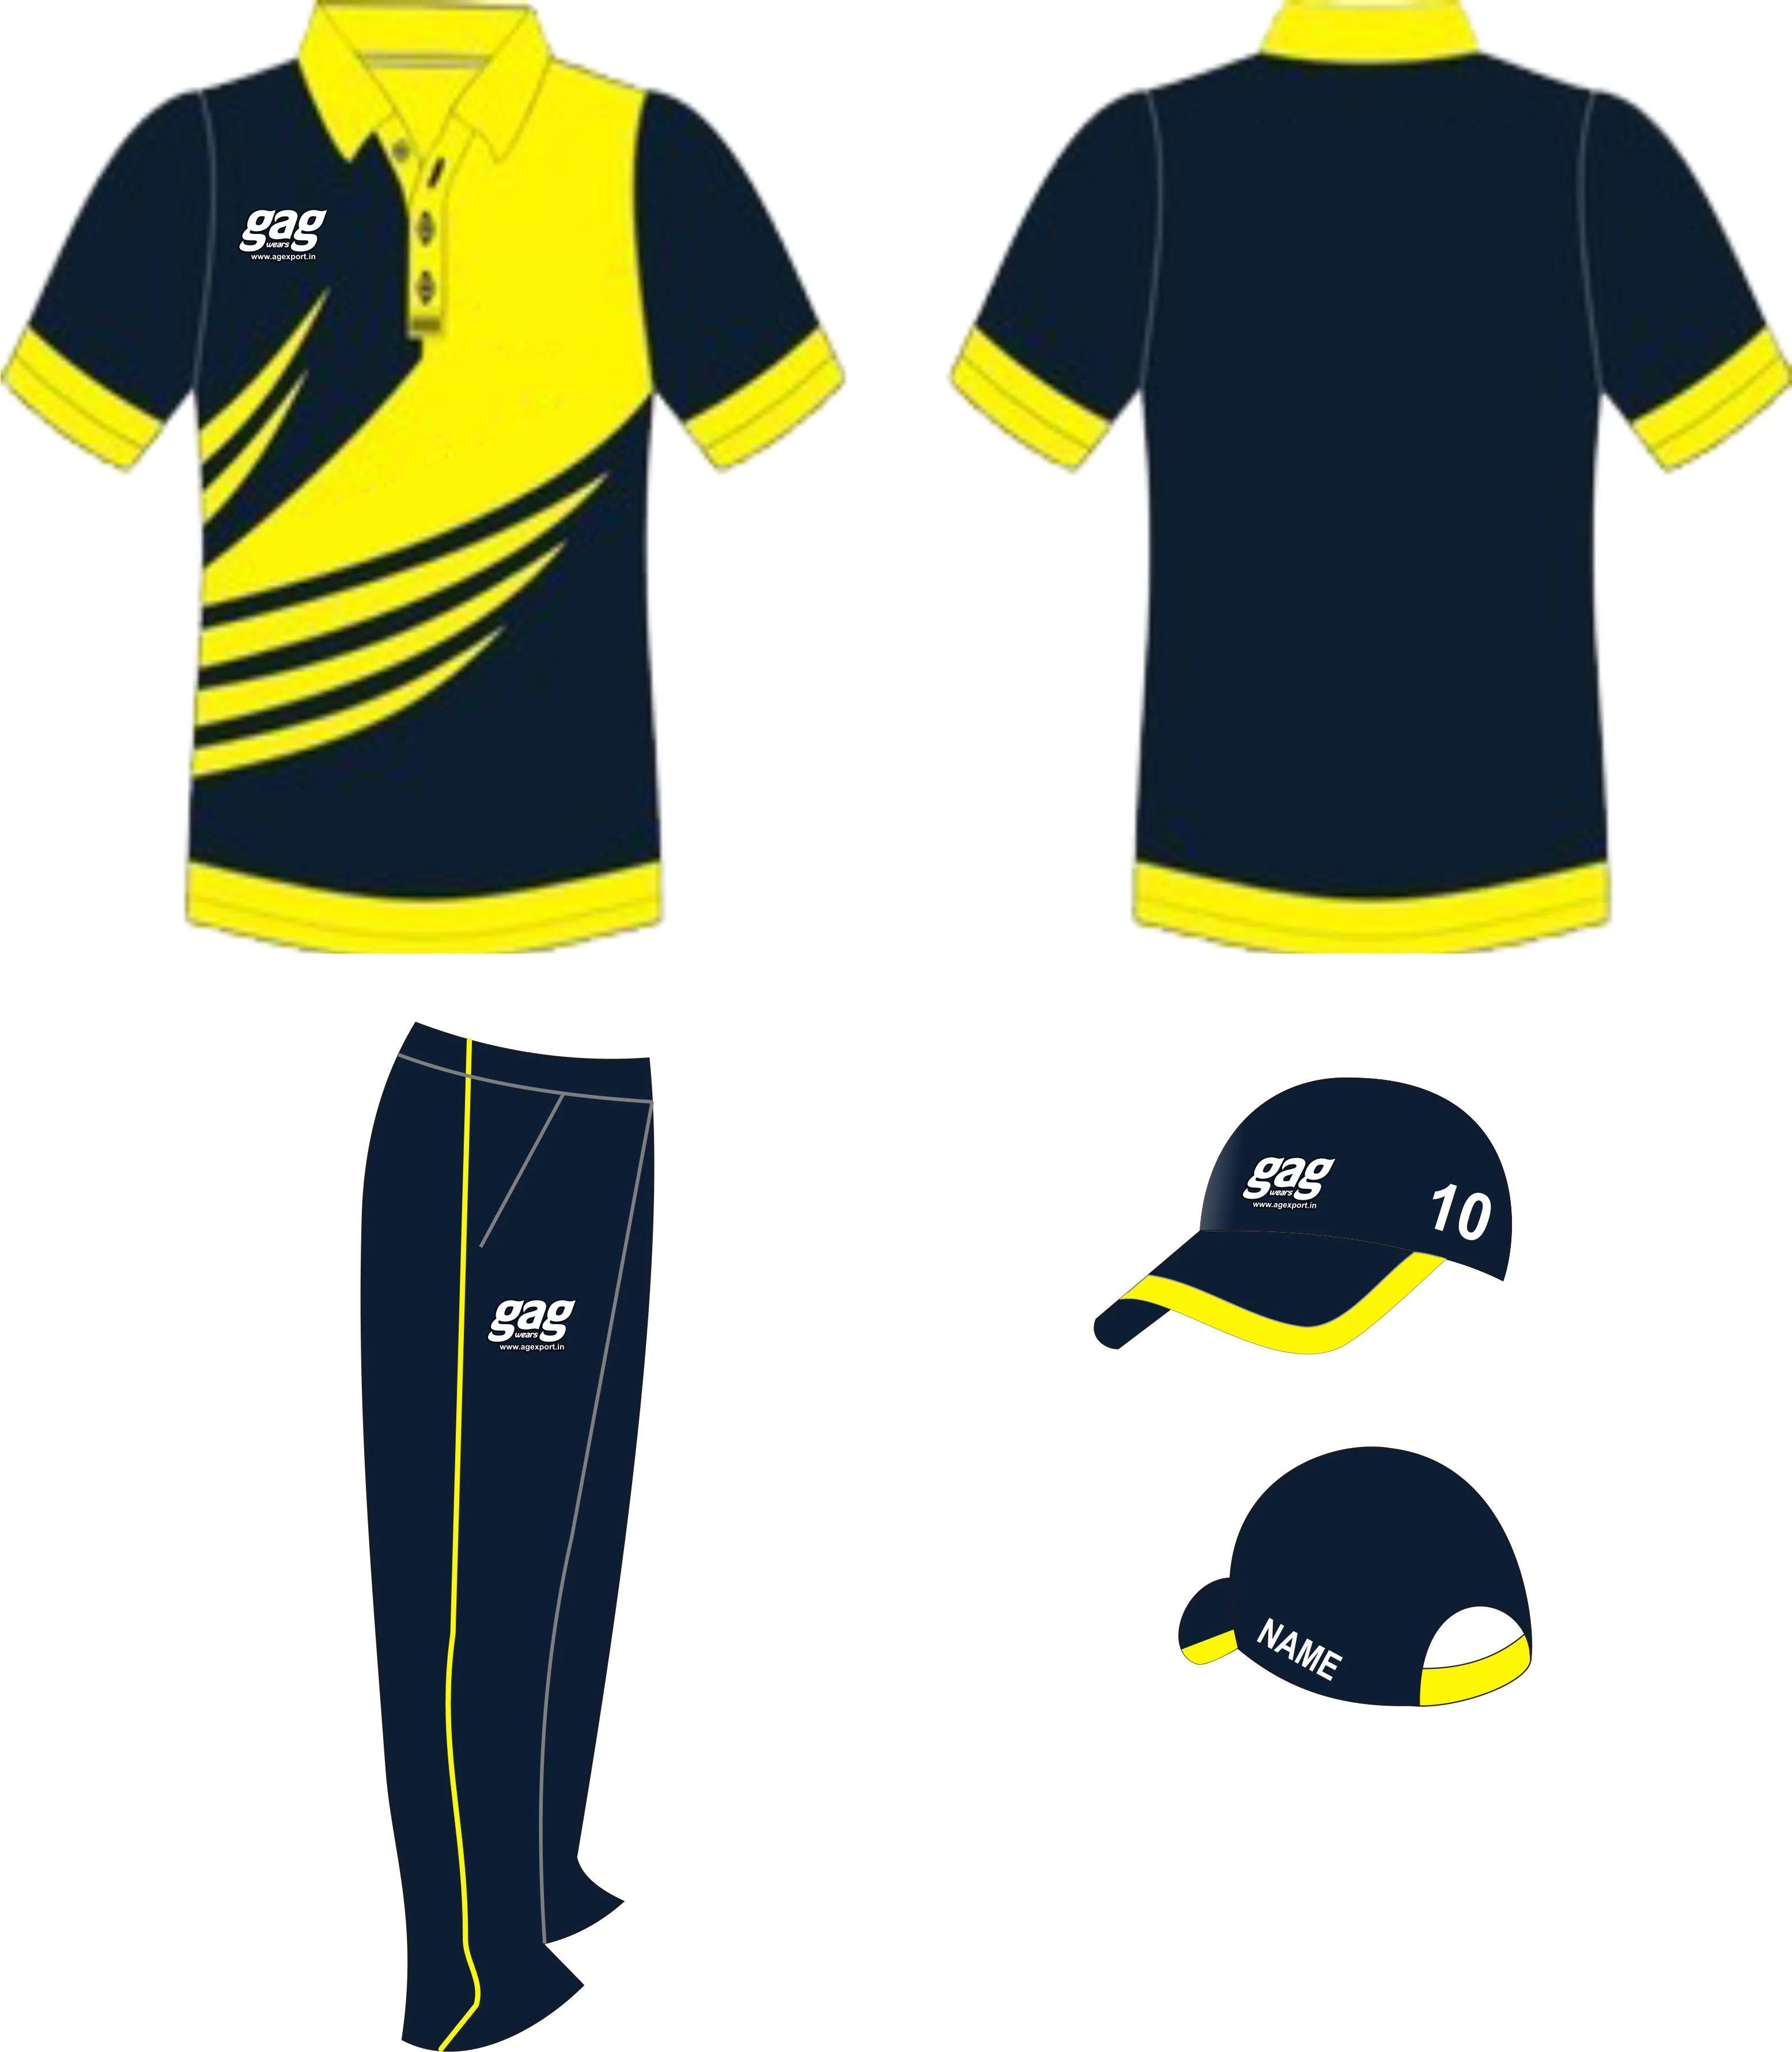 cricket jersey online india